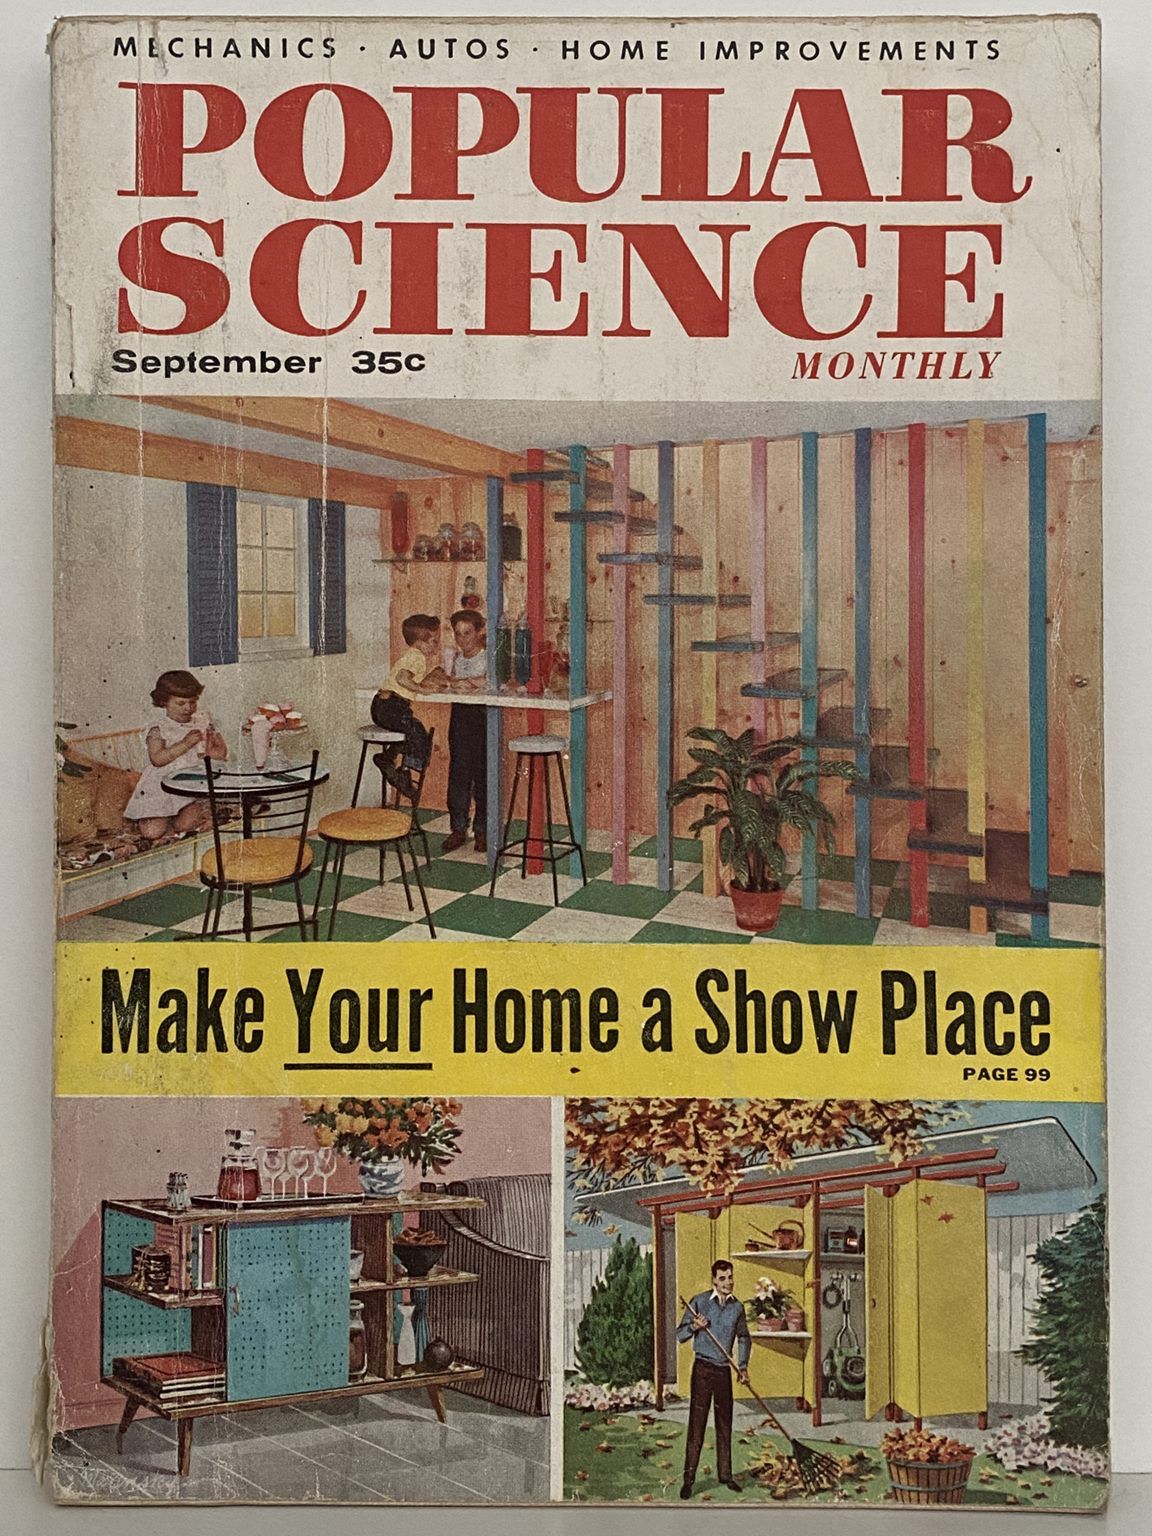 VINTAGE MAGAZINE: Popular Science - September 1956